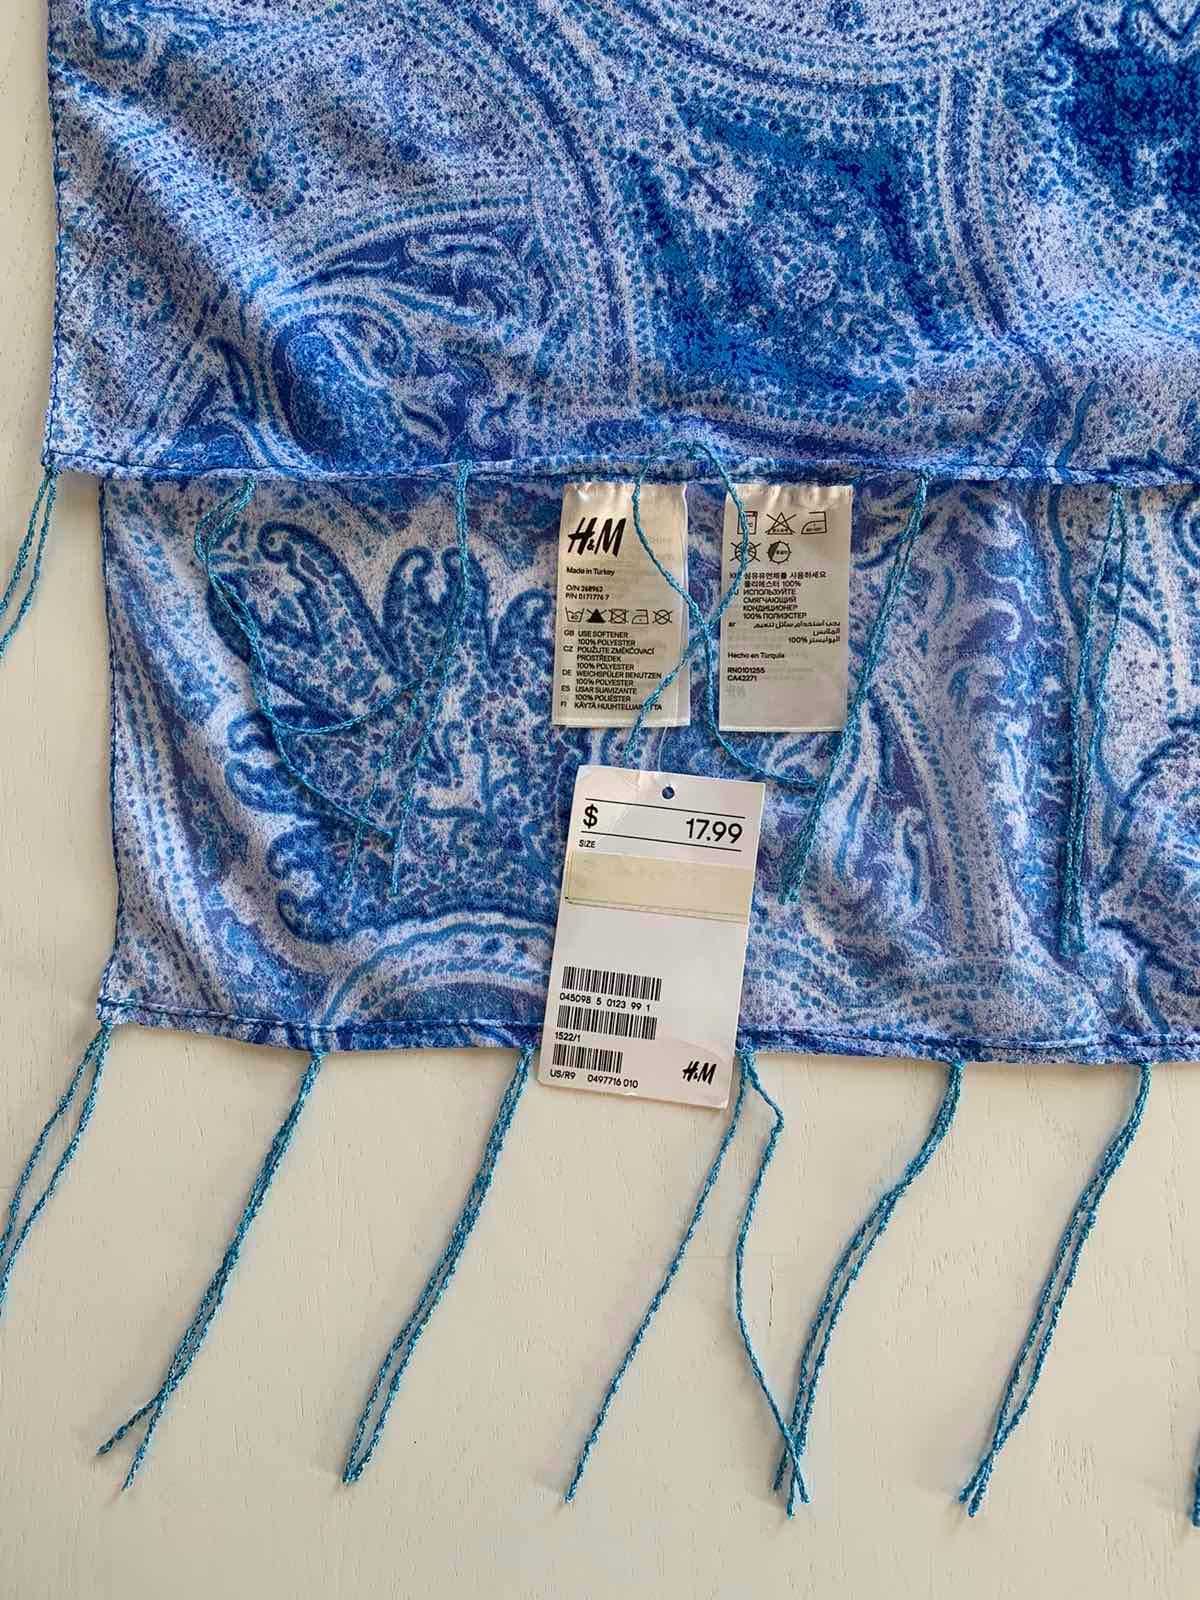 Парео на купальник H&M, накидка по форме - шарф с бахромой